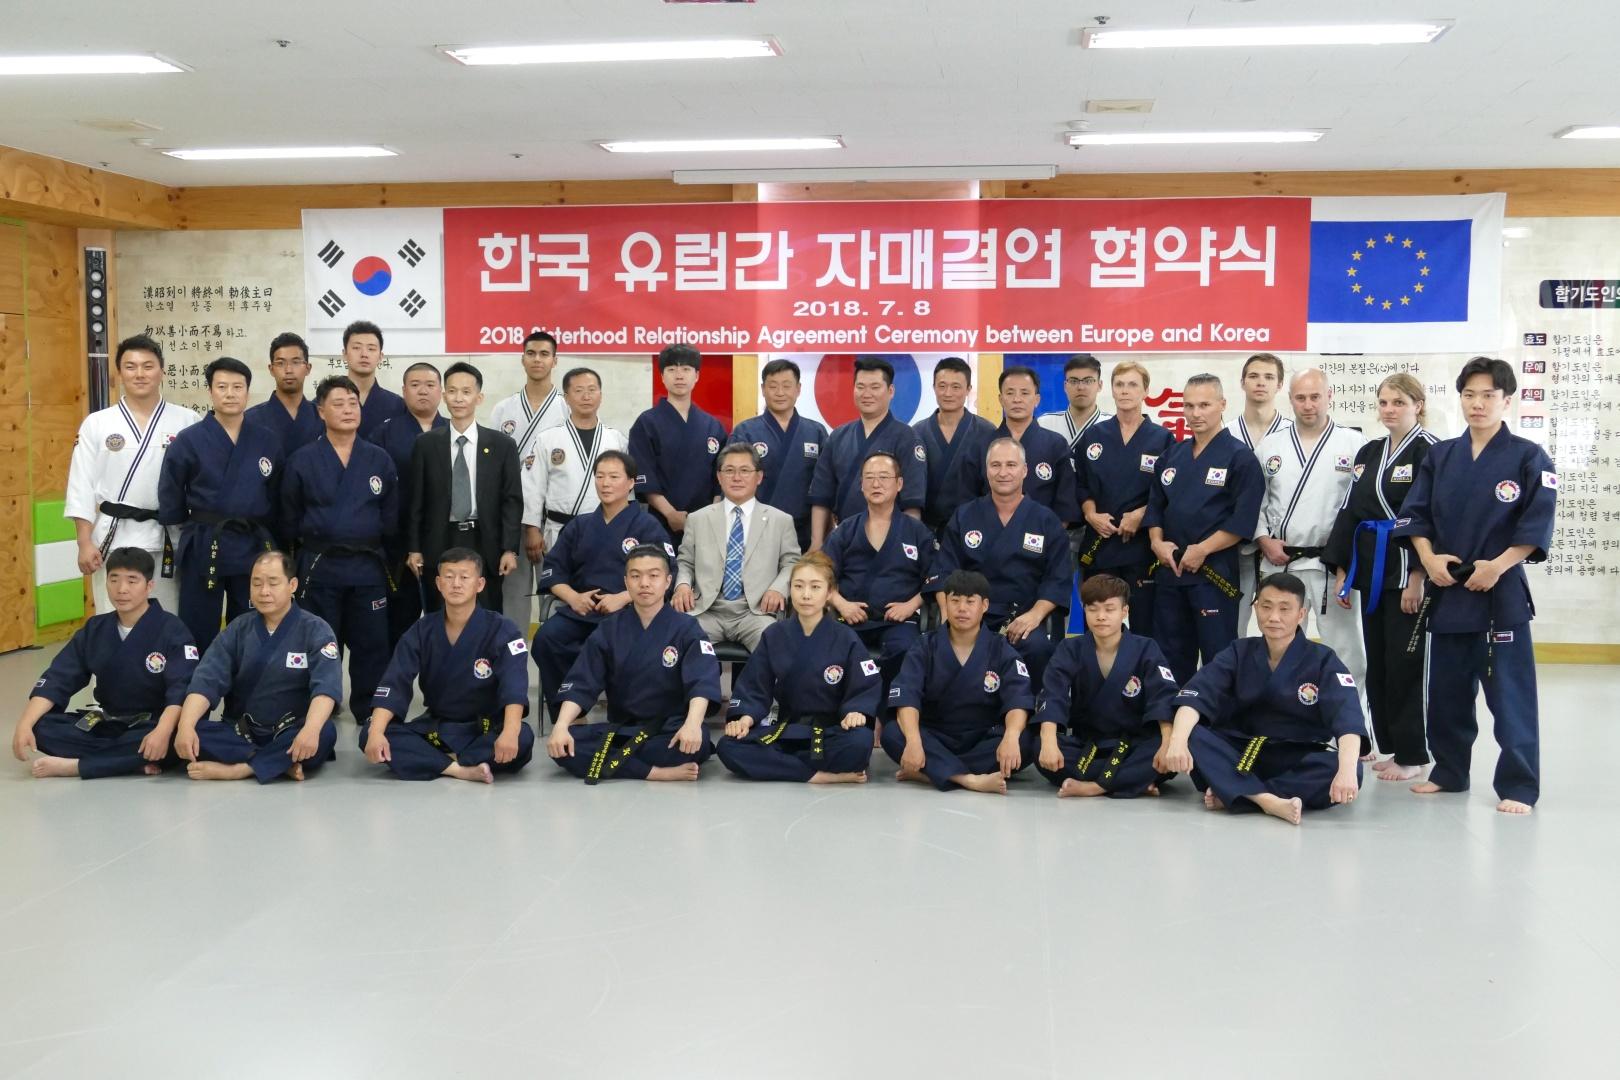 Training der Hapkido Meister in Korea 2018. Hapkido, koreanische Kampfkunst zur Selbstverteidigung.